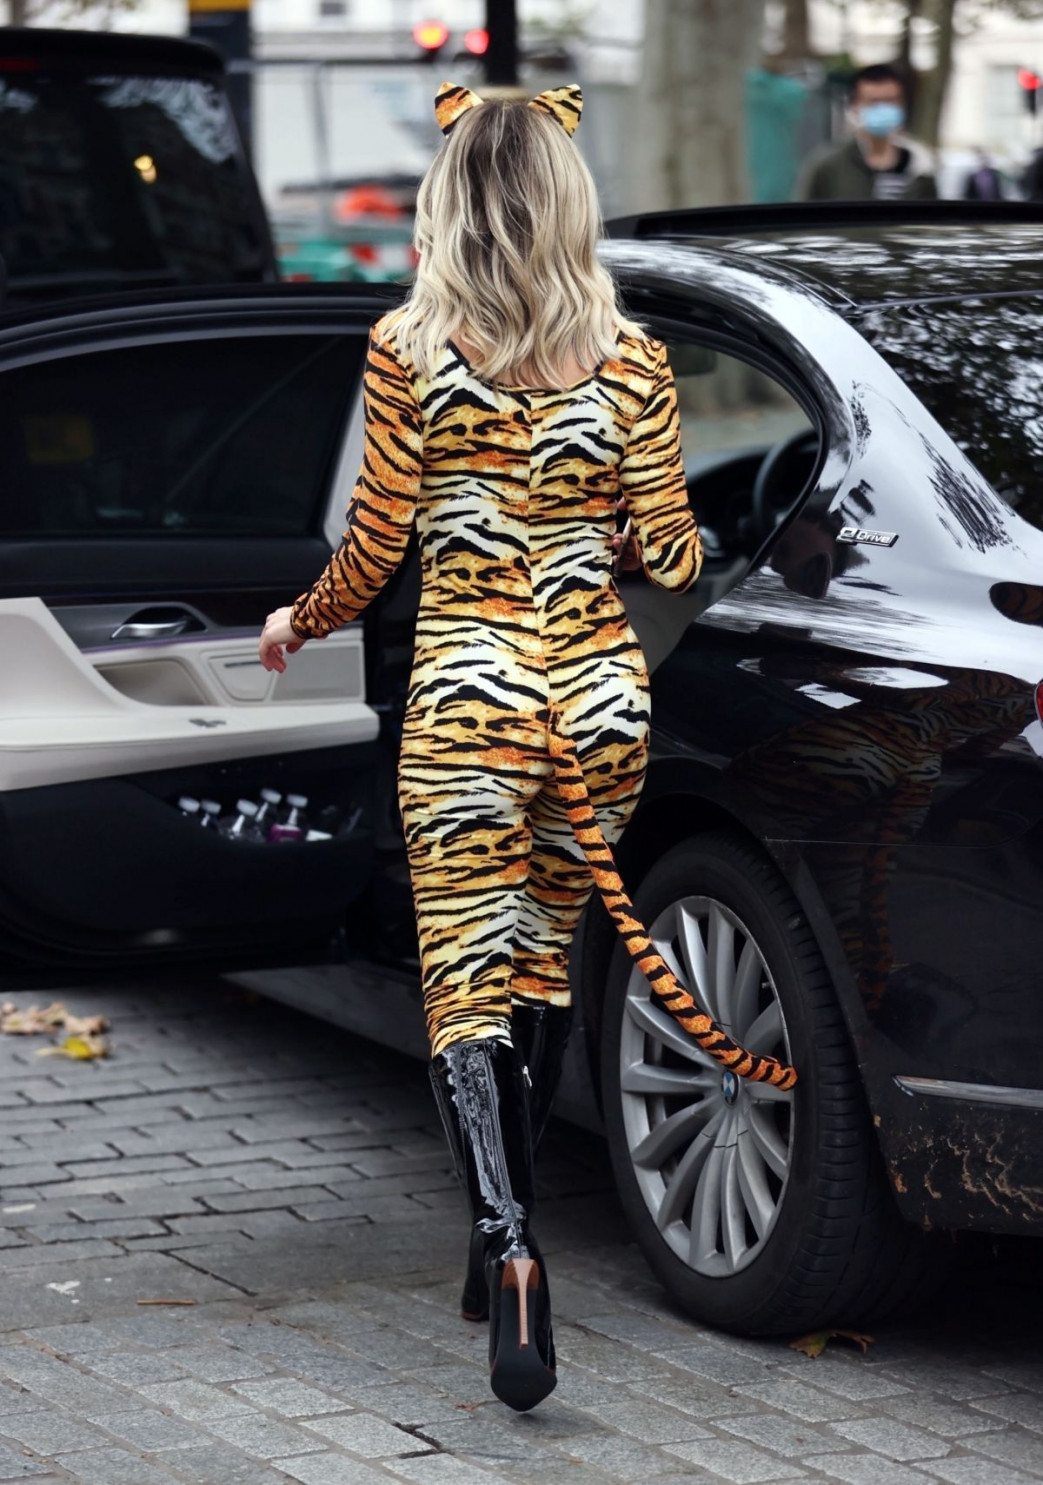 Ashley-Roberts-Stunning-in-Tiger-Catsuit-4.jpg